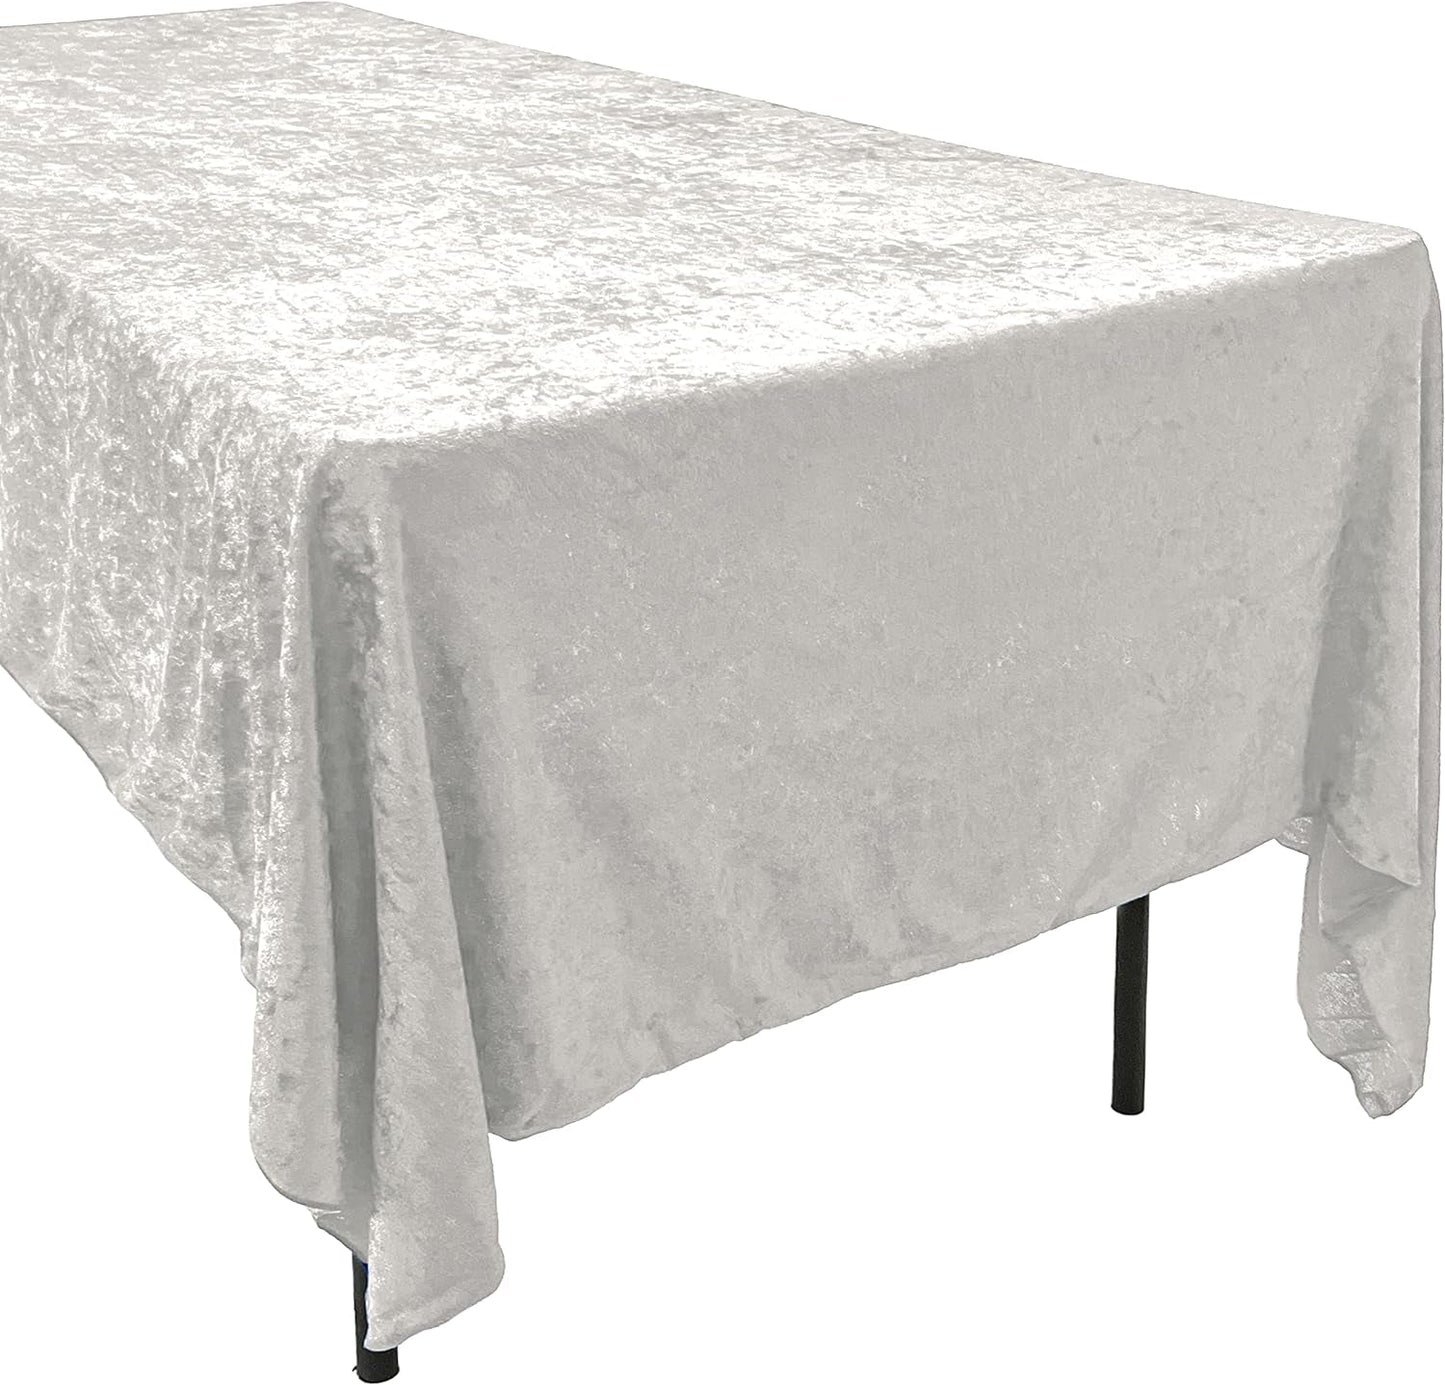 AK TRADING CO. Lush Panne Velvet Tablecloth - 60 X 102 Inch Rectangular Table, White